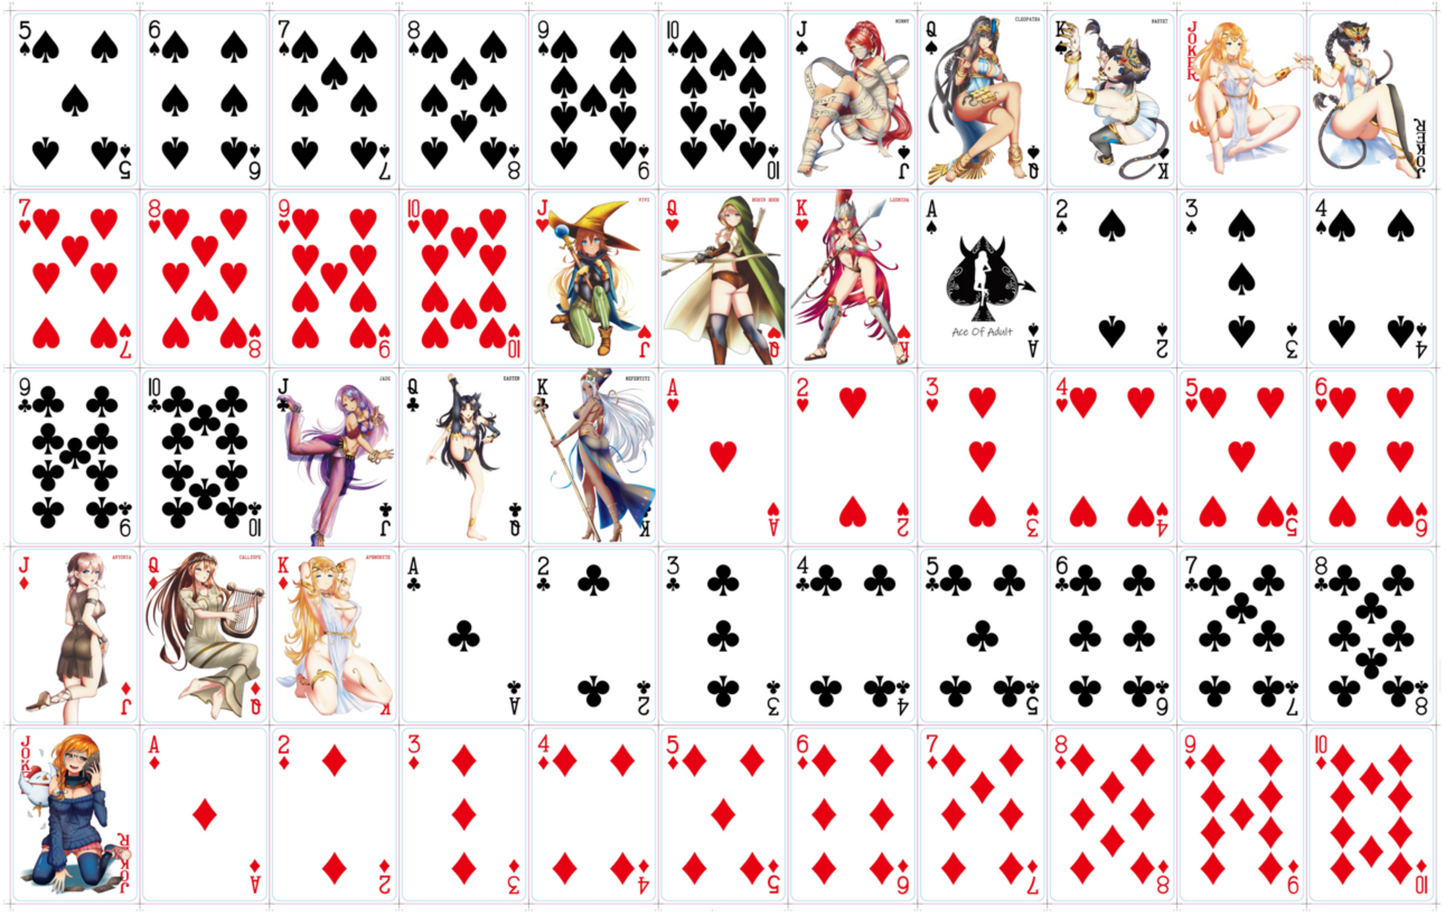 Gentlemen's Lair - Pin-up Anime Playing Cards